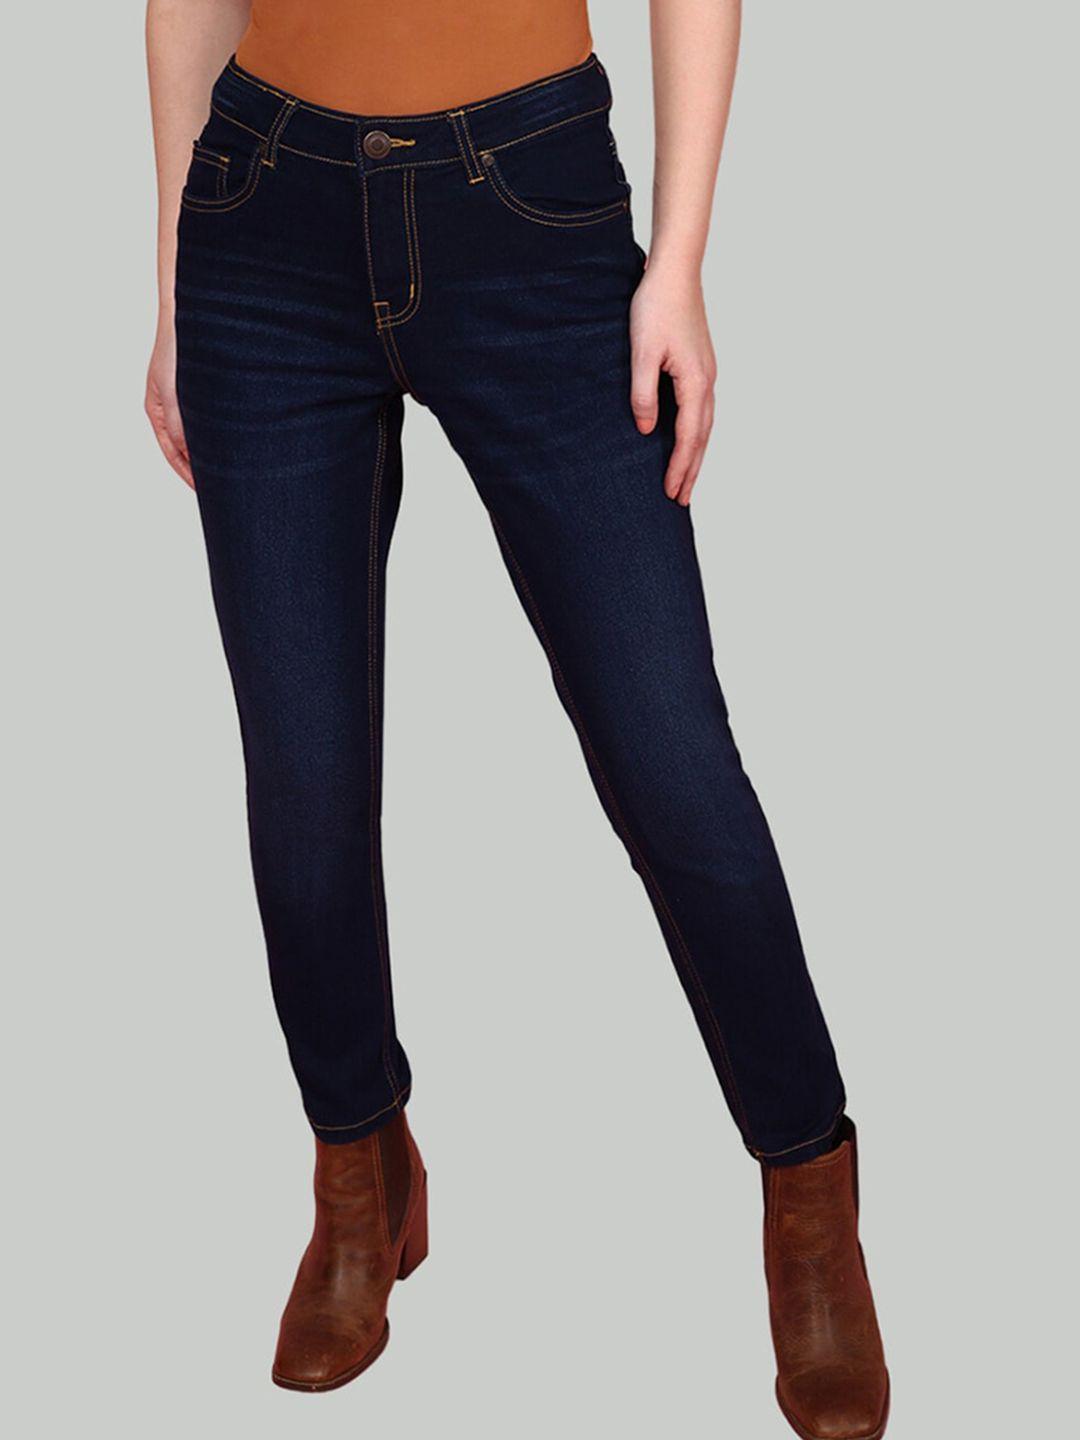 juneberry-women-original-clean-look-slim-fit-light-fade-stretchable-jeans